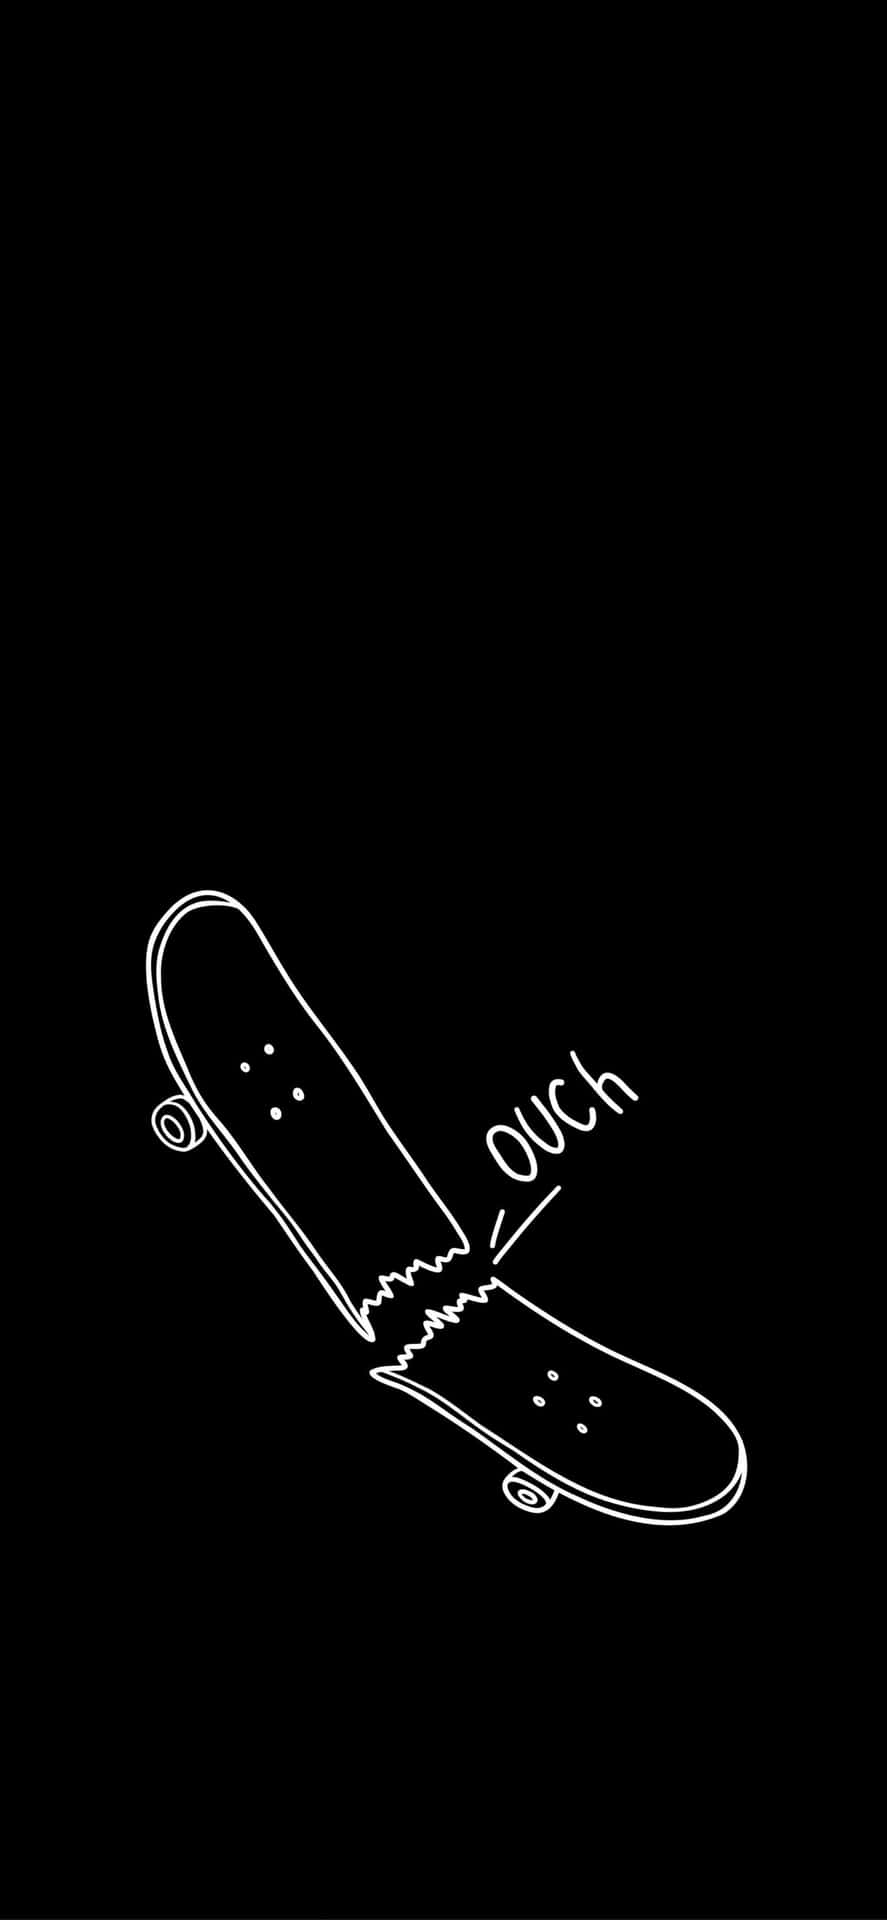 Skateboard Ouch Illustration Wallpaper